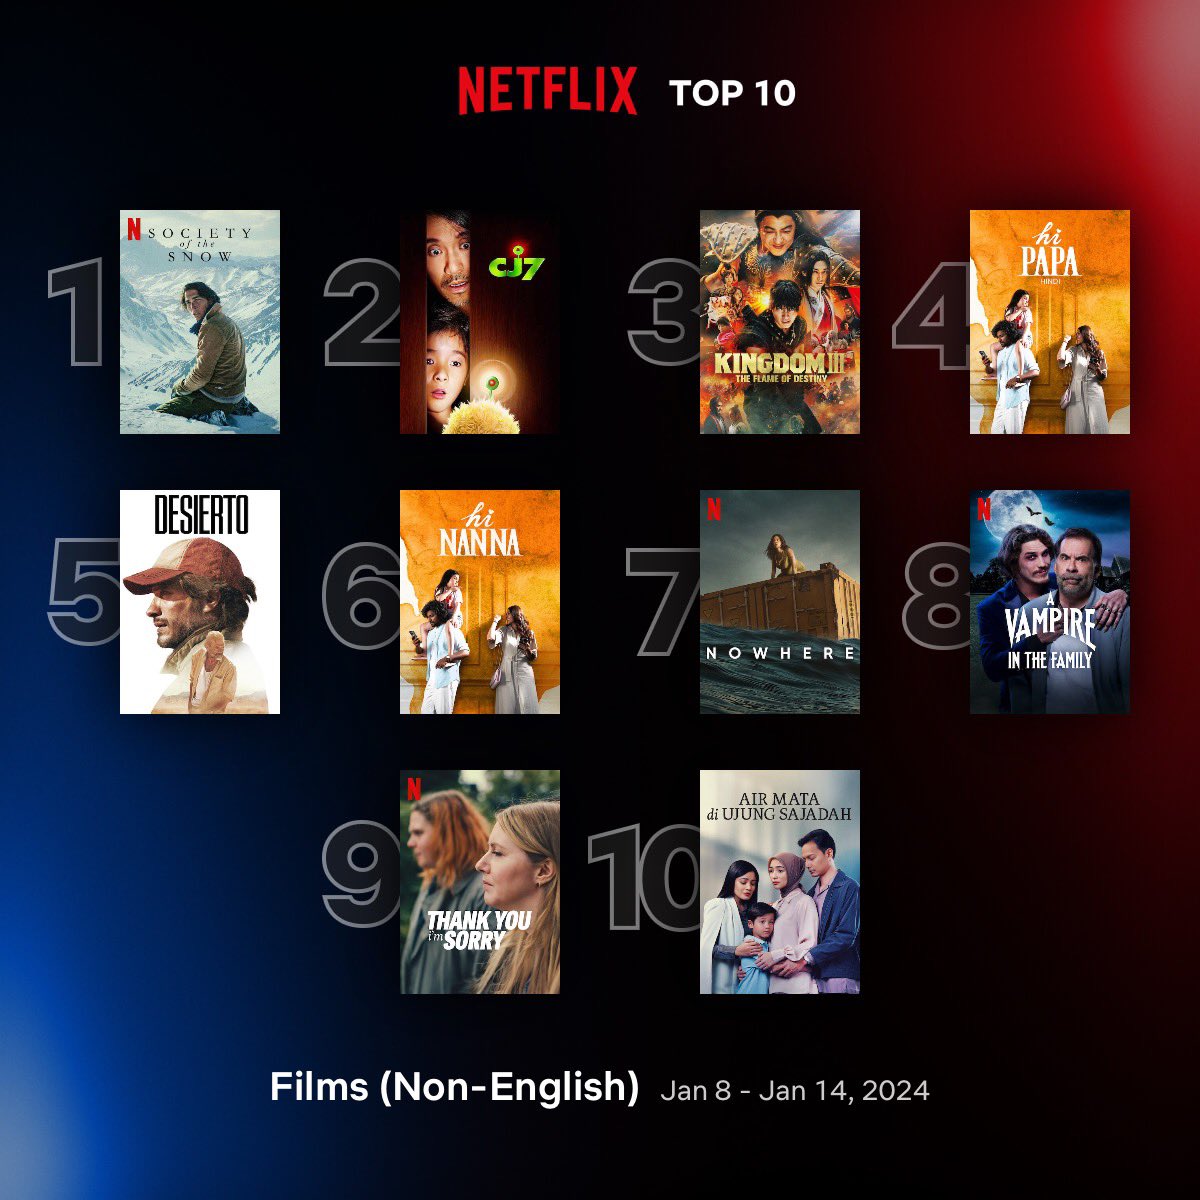 Global Top 10 Non-English Films on Netflix between 8 - 14 January

1. #SocietyOfTheSnow 🇪🇸🇺🇸
2. #CJ7 🇭🇰🇨🇳
3. #Kingdom3: The Flame of Destiny 🇯🇵
4. #HiPapa (Hindi) 🇮🇳
5. #Desierto 🇲🇽 🇫🇷
6. #HiNanna 🇮🇳
7. #Nowhere 🇪🇸
8. #AVampireInTheFamily 🇧🇷
9. #ThankYouImSorry 🇸🇪
10.…